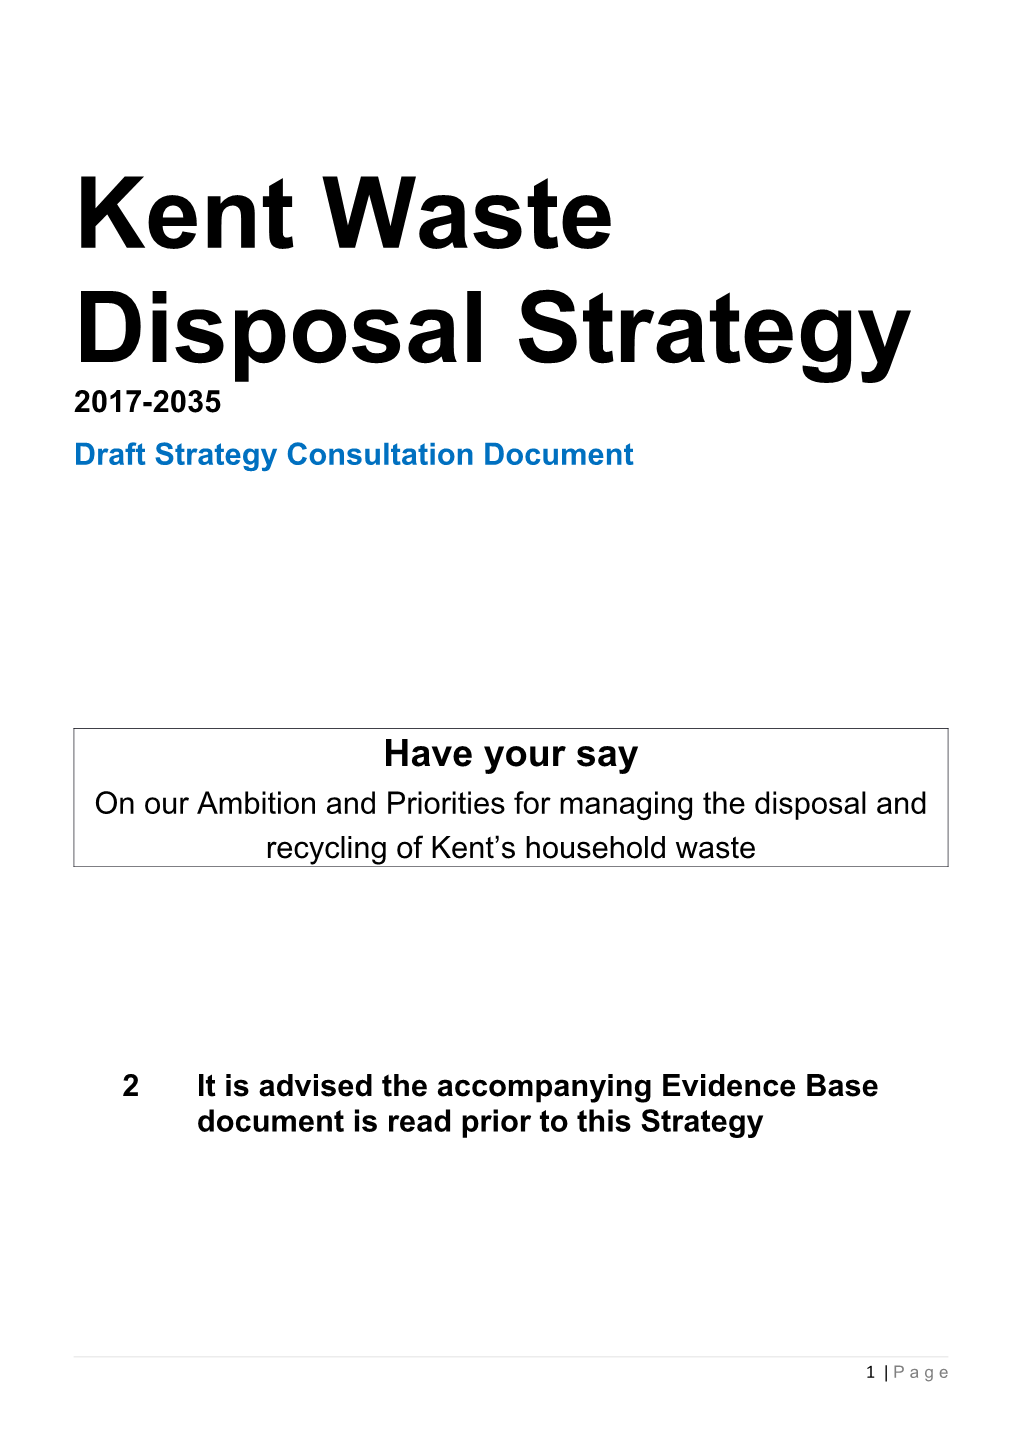 Kent Waste Disposal Strategy 2017-2035